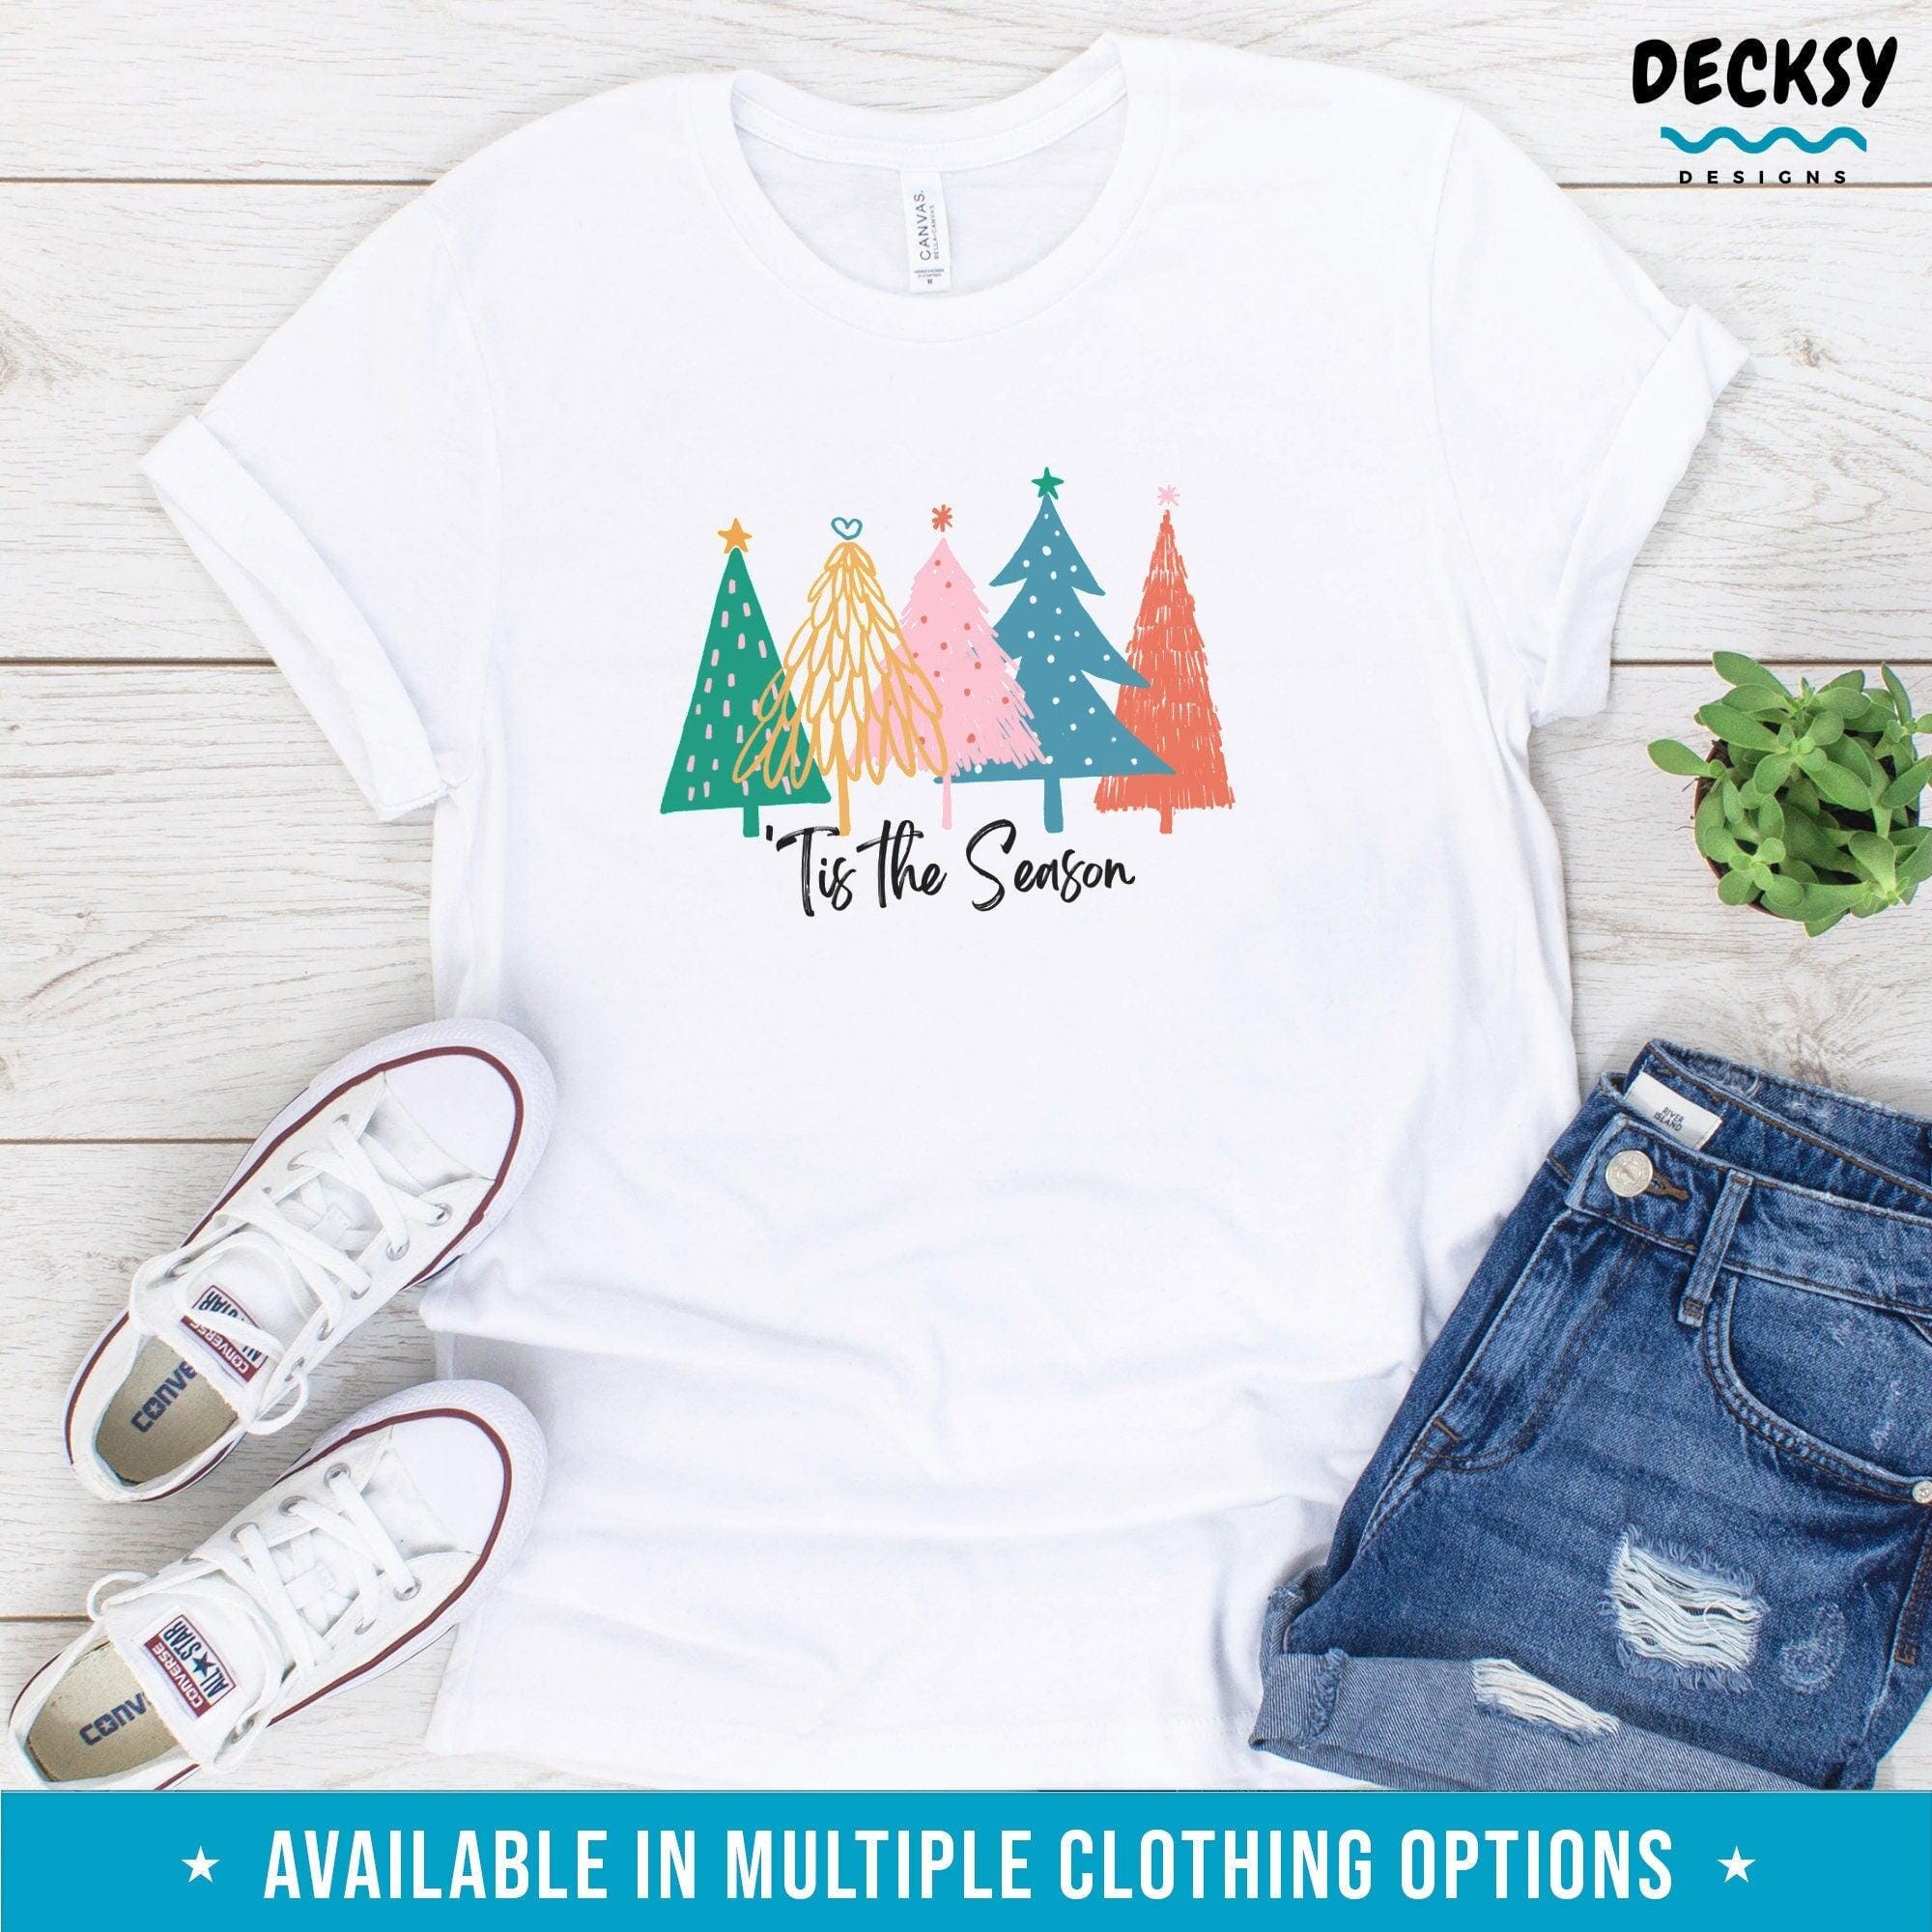 Christmas Tree Shirt, Tis The Season, Merry Christmas Gift-Clothing:Gender-Neutral Adult Clothing:Tops & Tees:T-shirts:Graphic Tees-DecksyDesigns